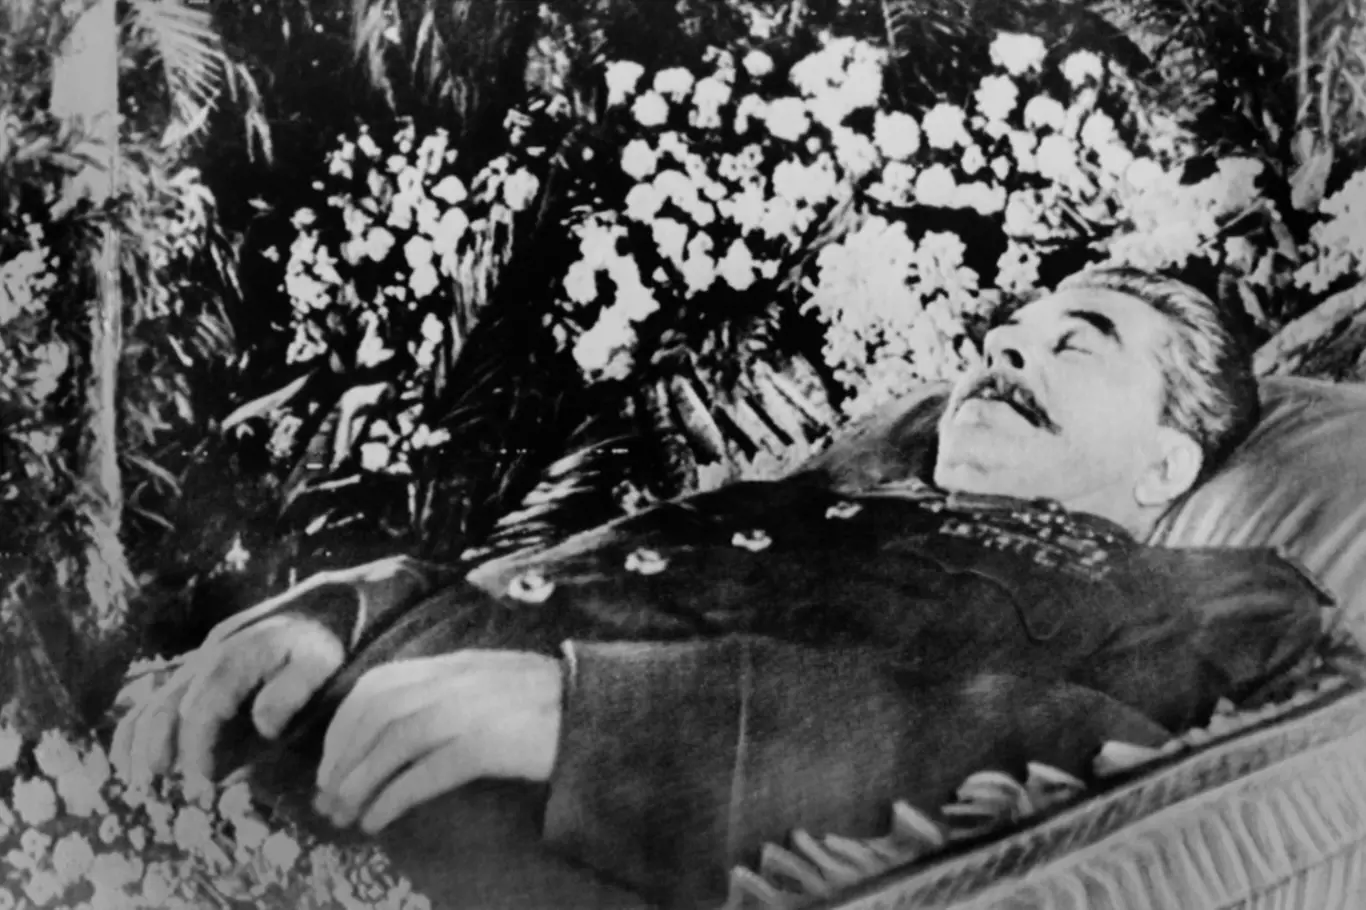 J.V. Stalin